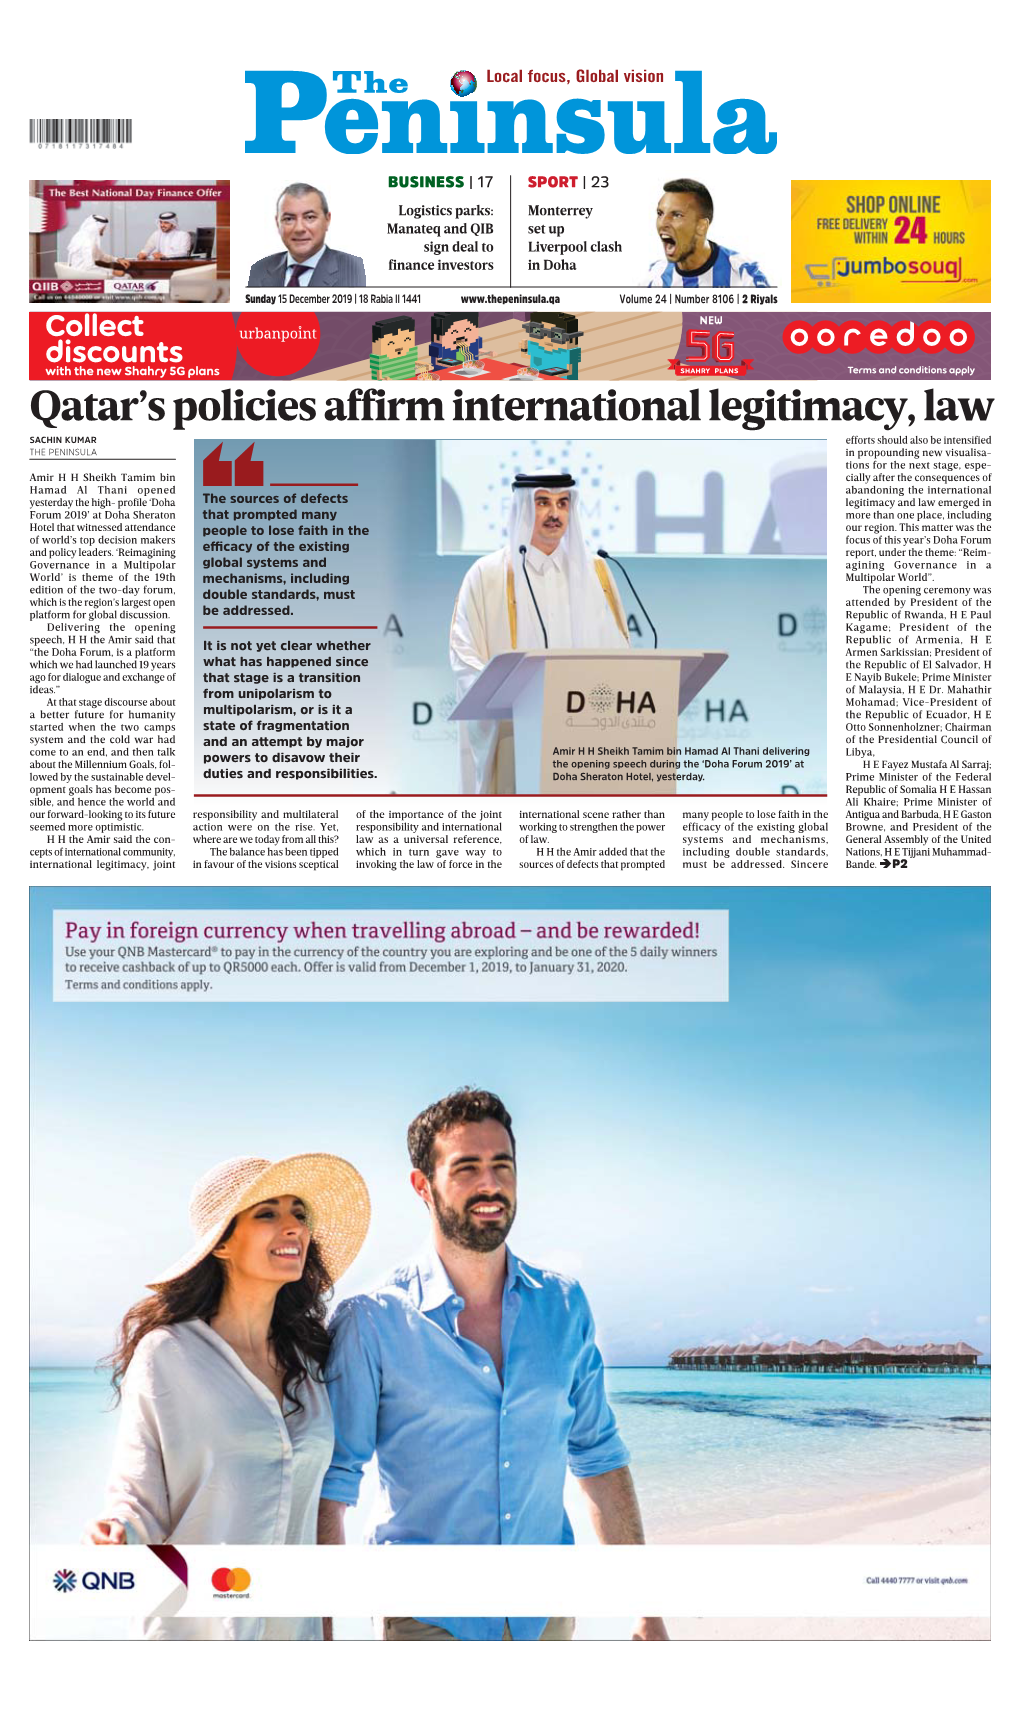 Qatar's Policies Affirm International Legitimacy